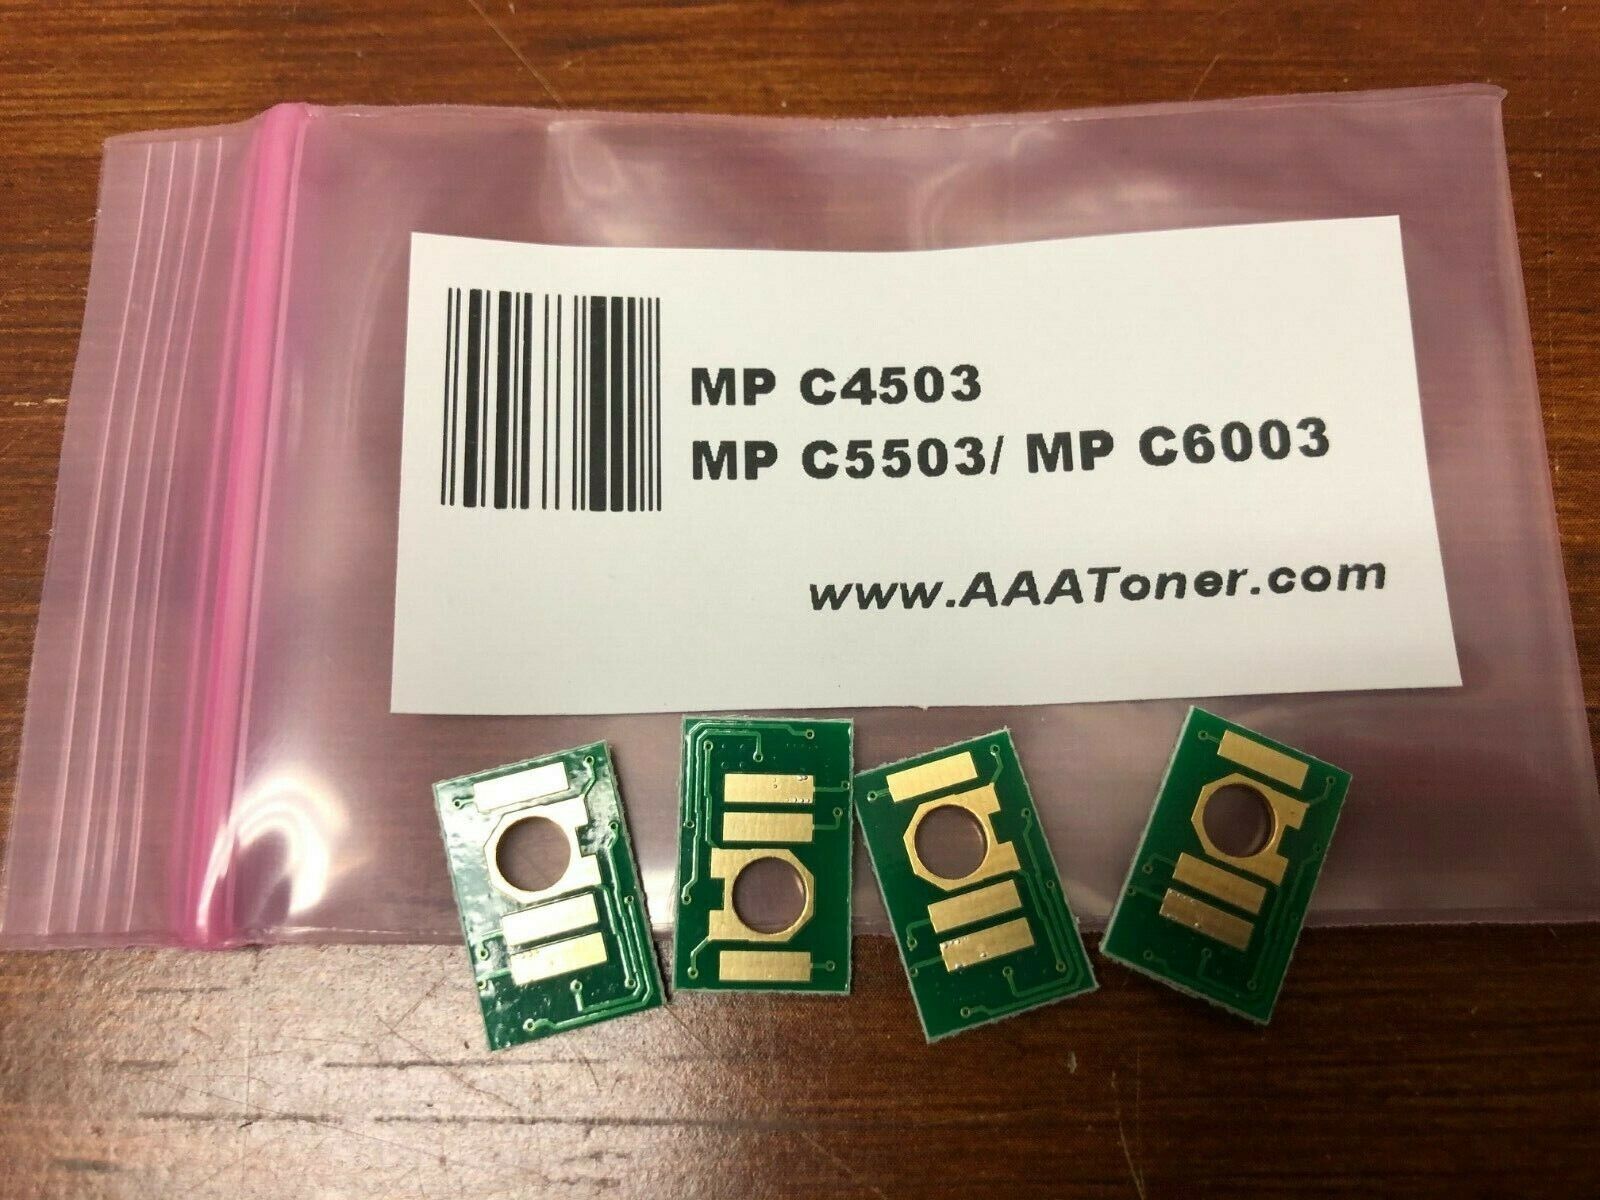 4 Toner Chip for Ricoh MP C4503, MP C5503, MP C6003 (841849 ~ 841850) Refill